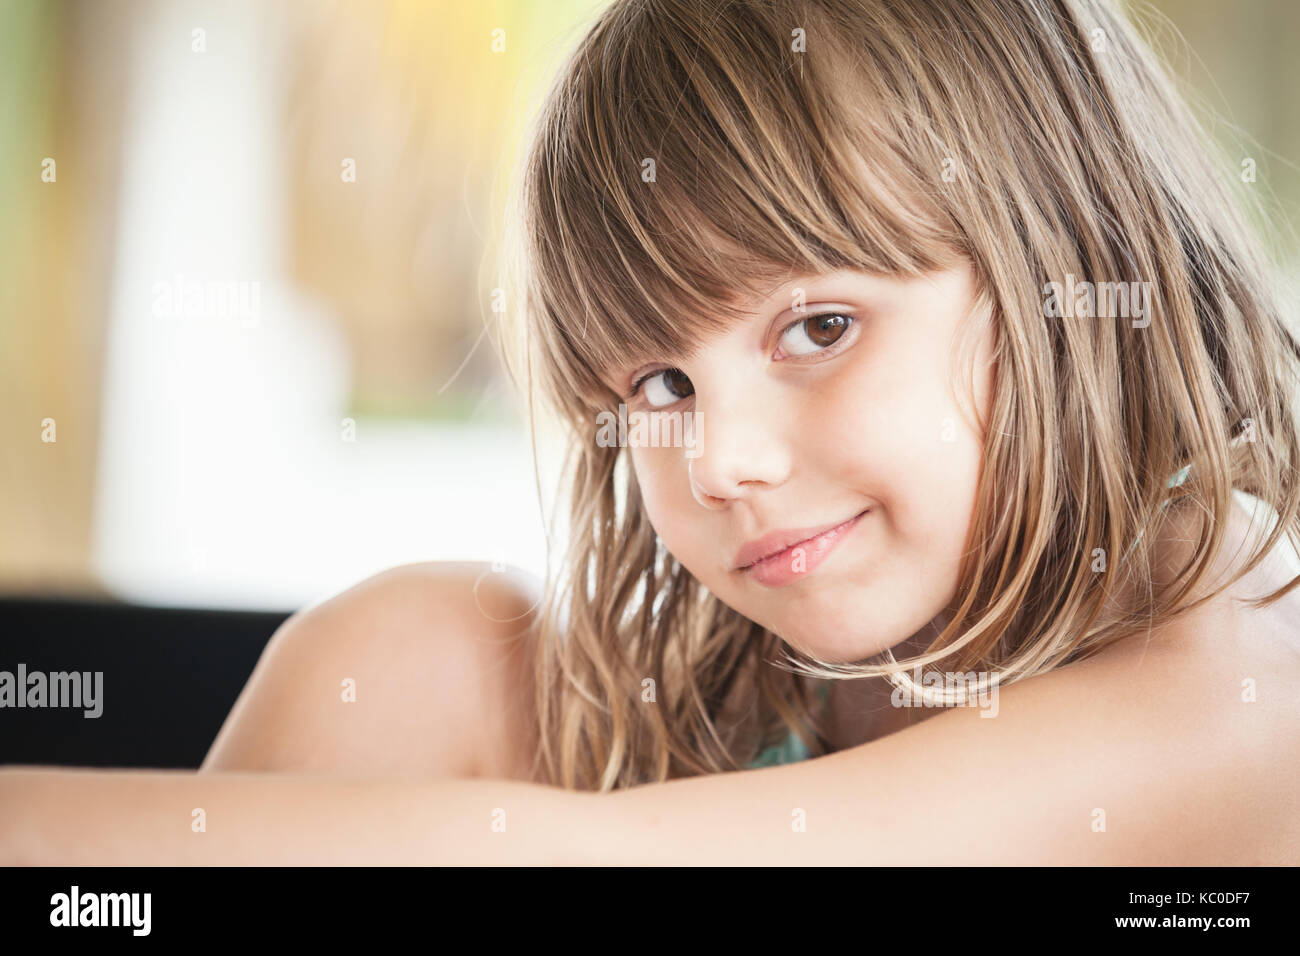 Serious Blond Caucasian little girl, close-up outdoor face portrait Stock Photo